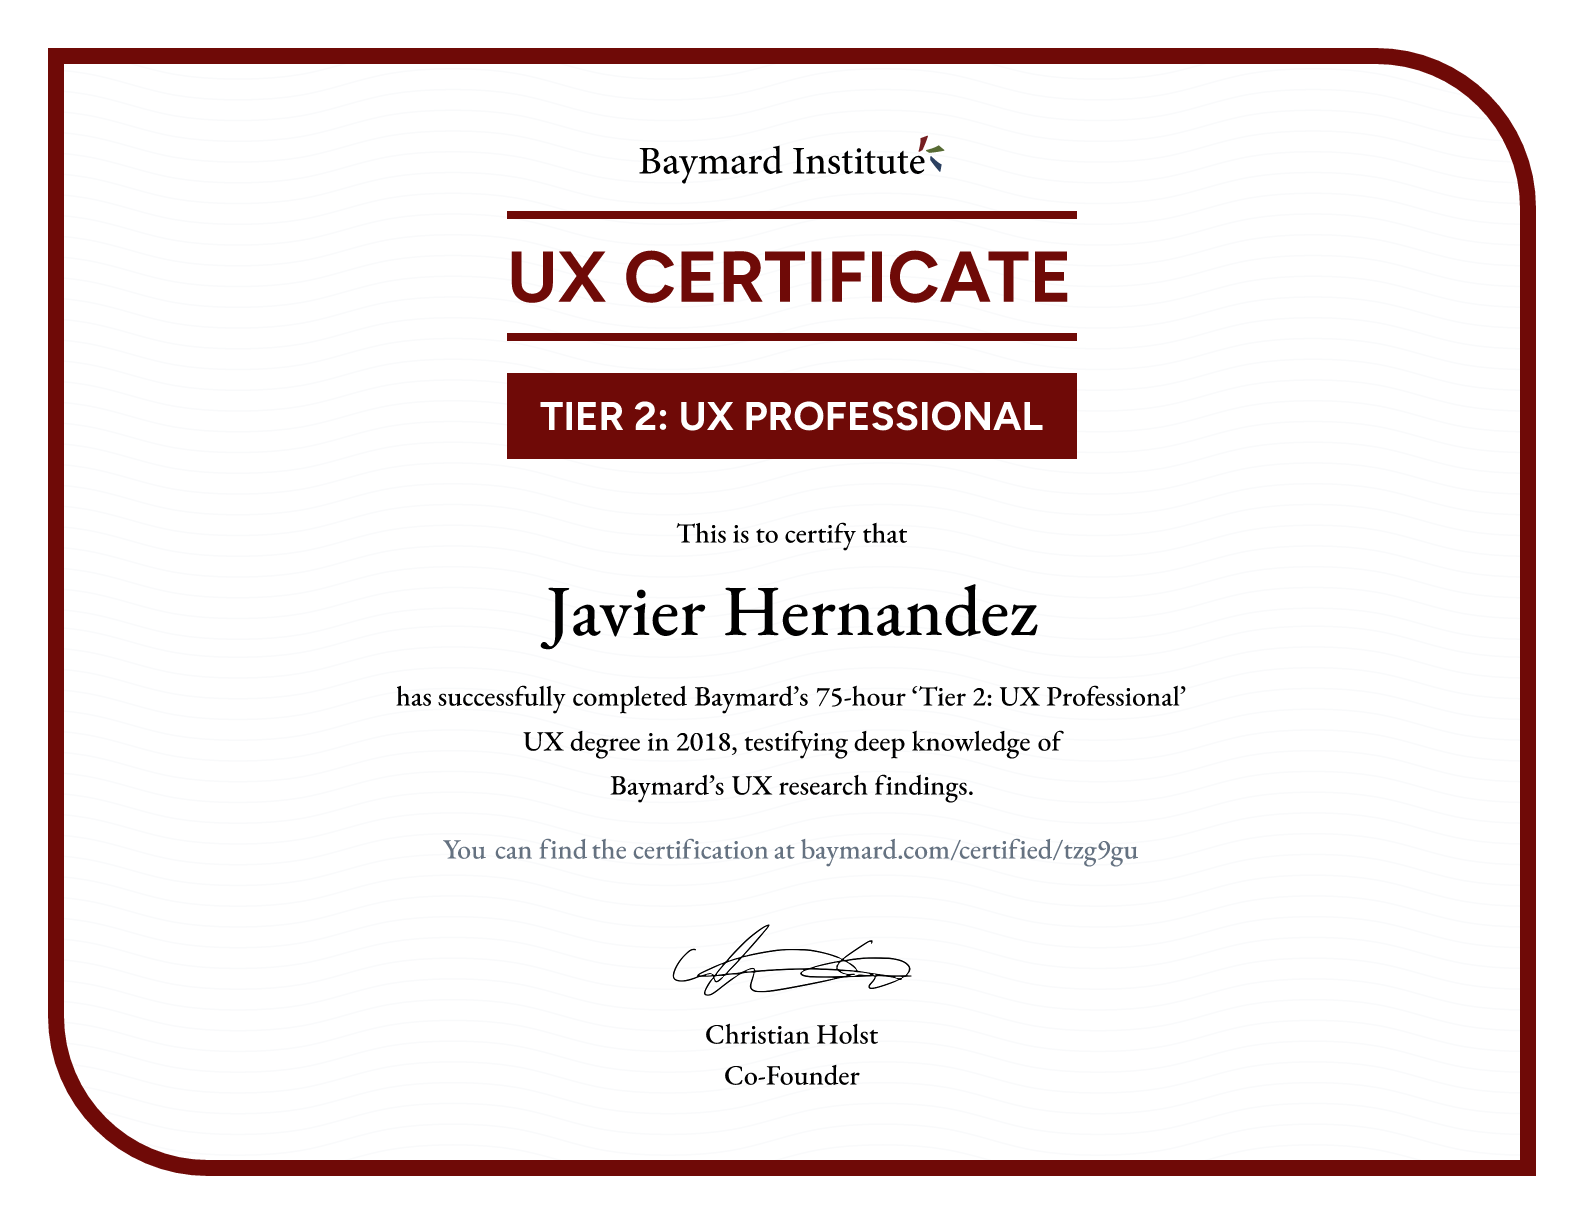 Javier Hernandez’s certificate